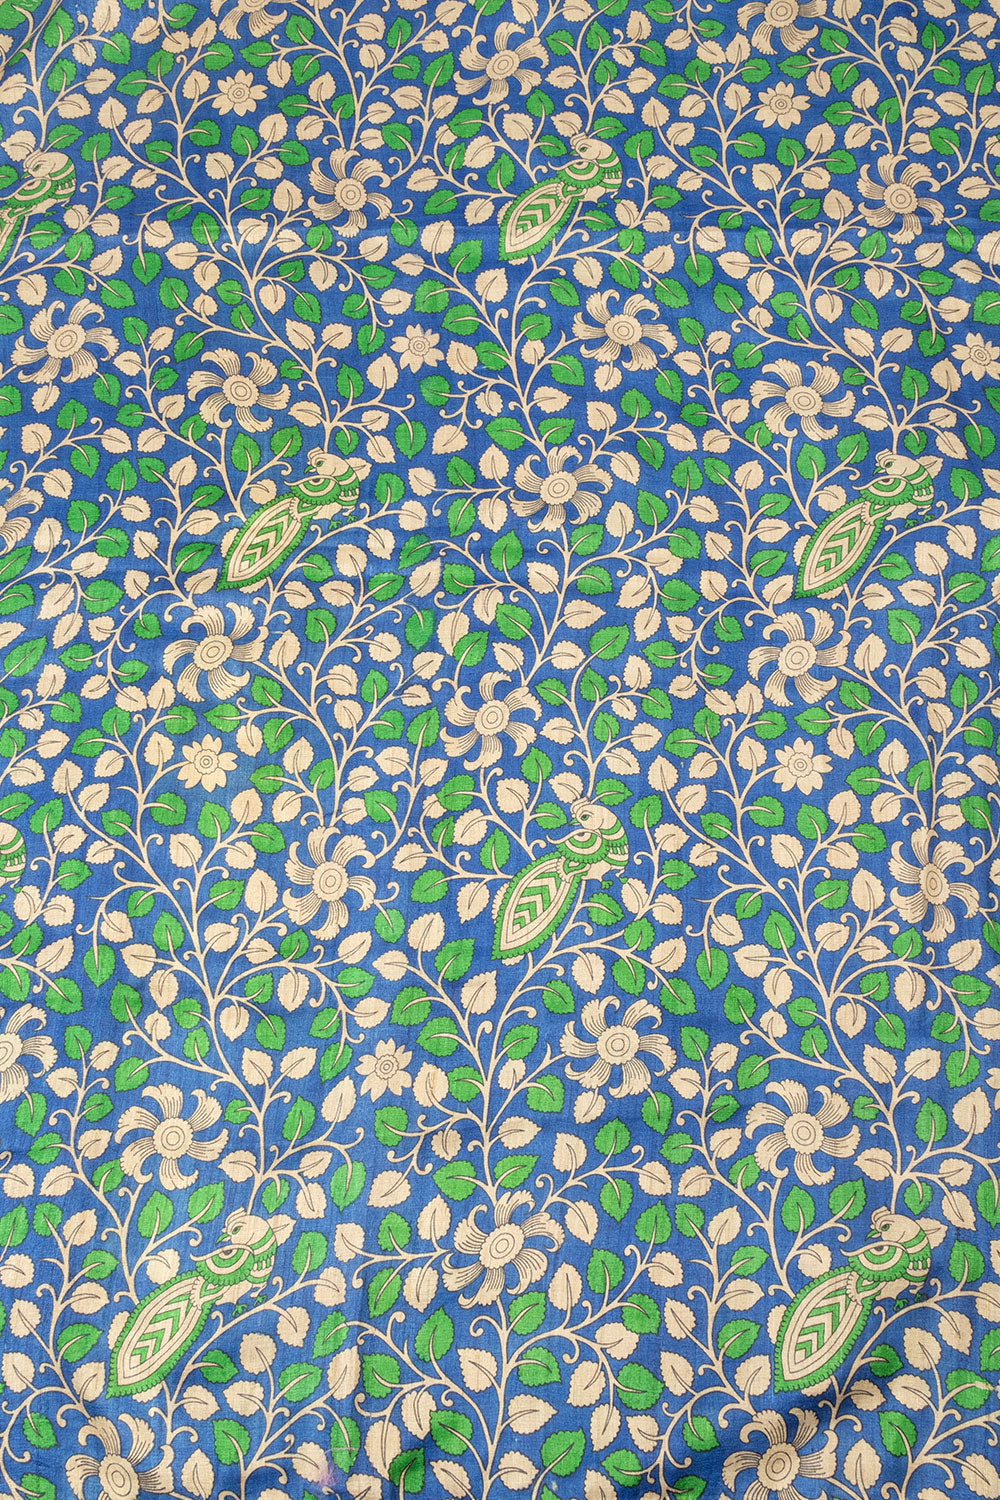 Almond Brown Kantha Embroidered Tussar Silk Saree - Avishya